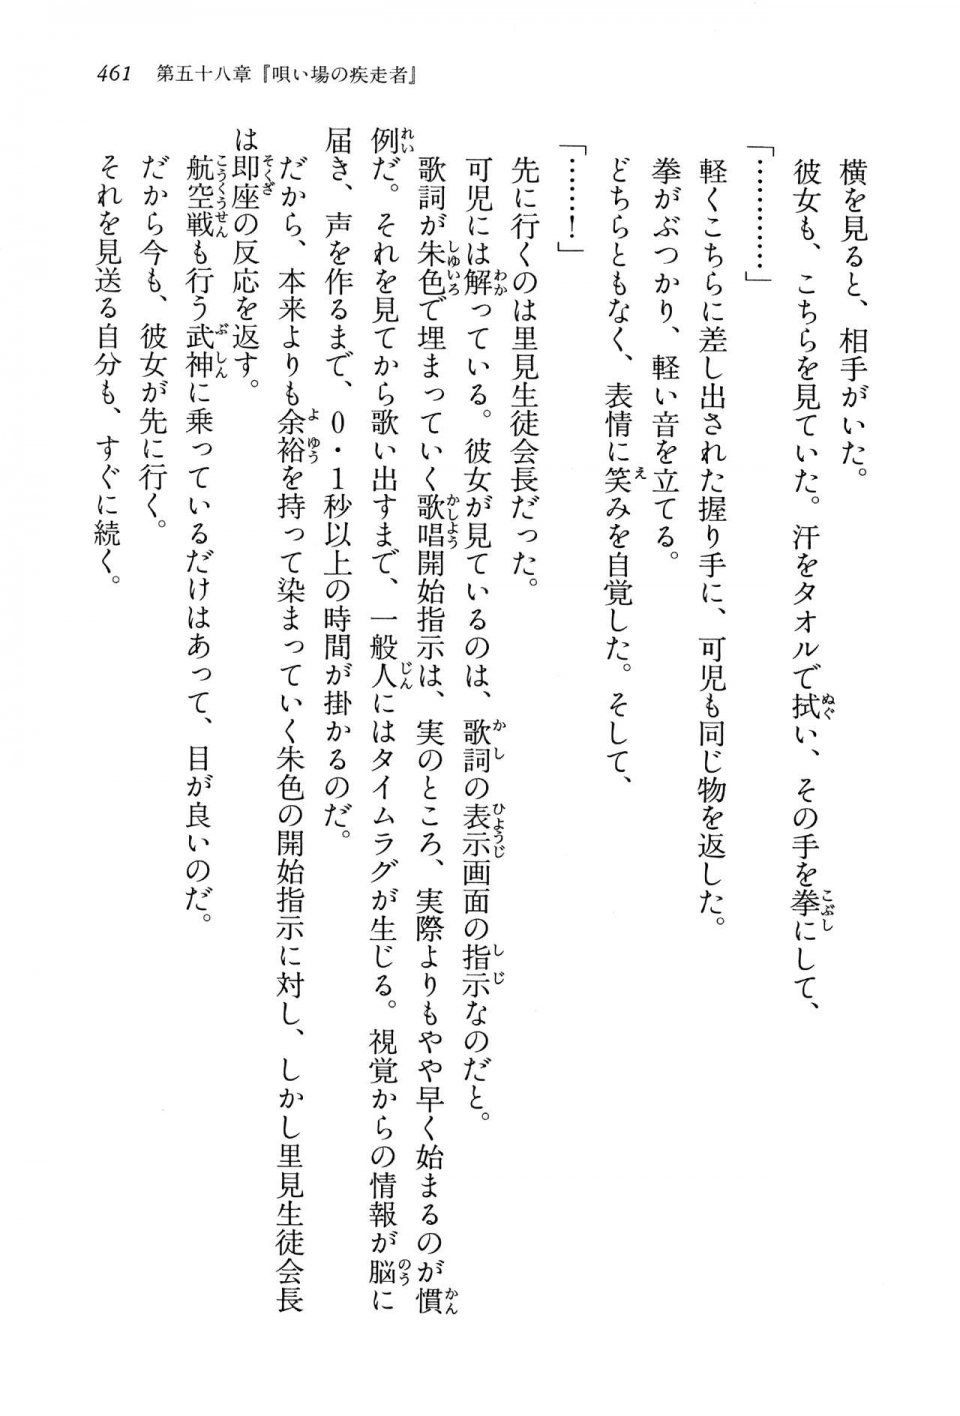 Kyoukai Senjou no Horizon LN Vol 15(6C) Part 1 - Photo #461